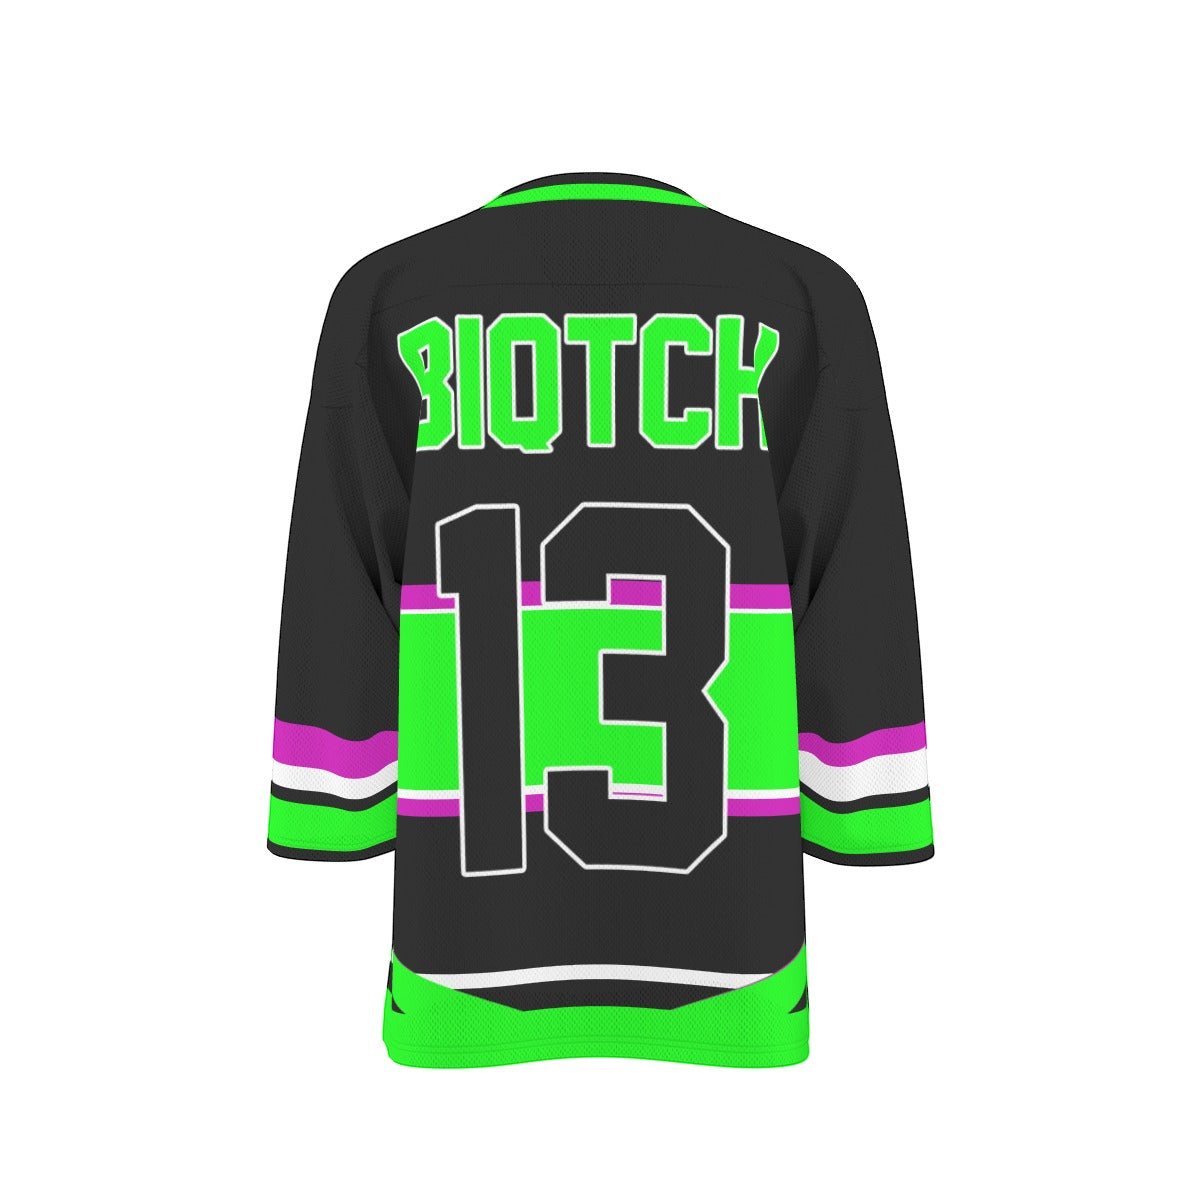 Biqtch Puddin - Warrior Hockey Jersey - dragqueenmerch